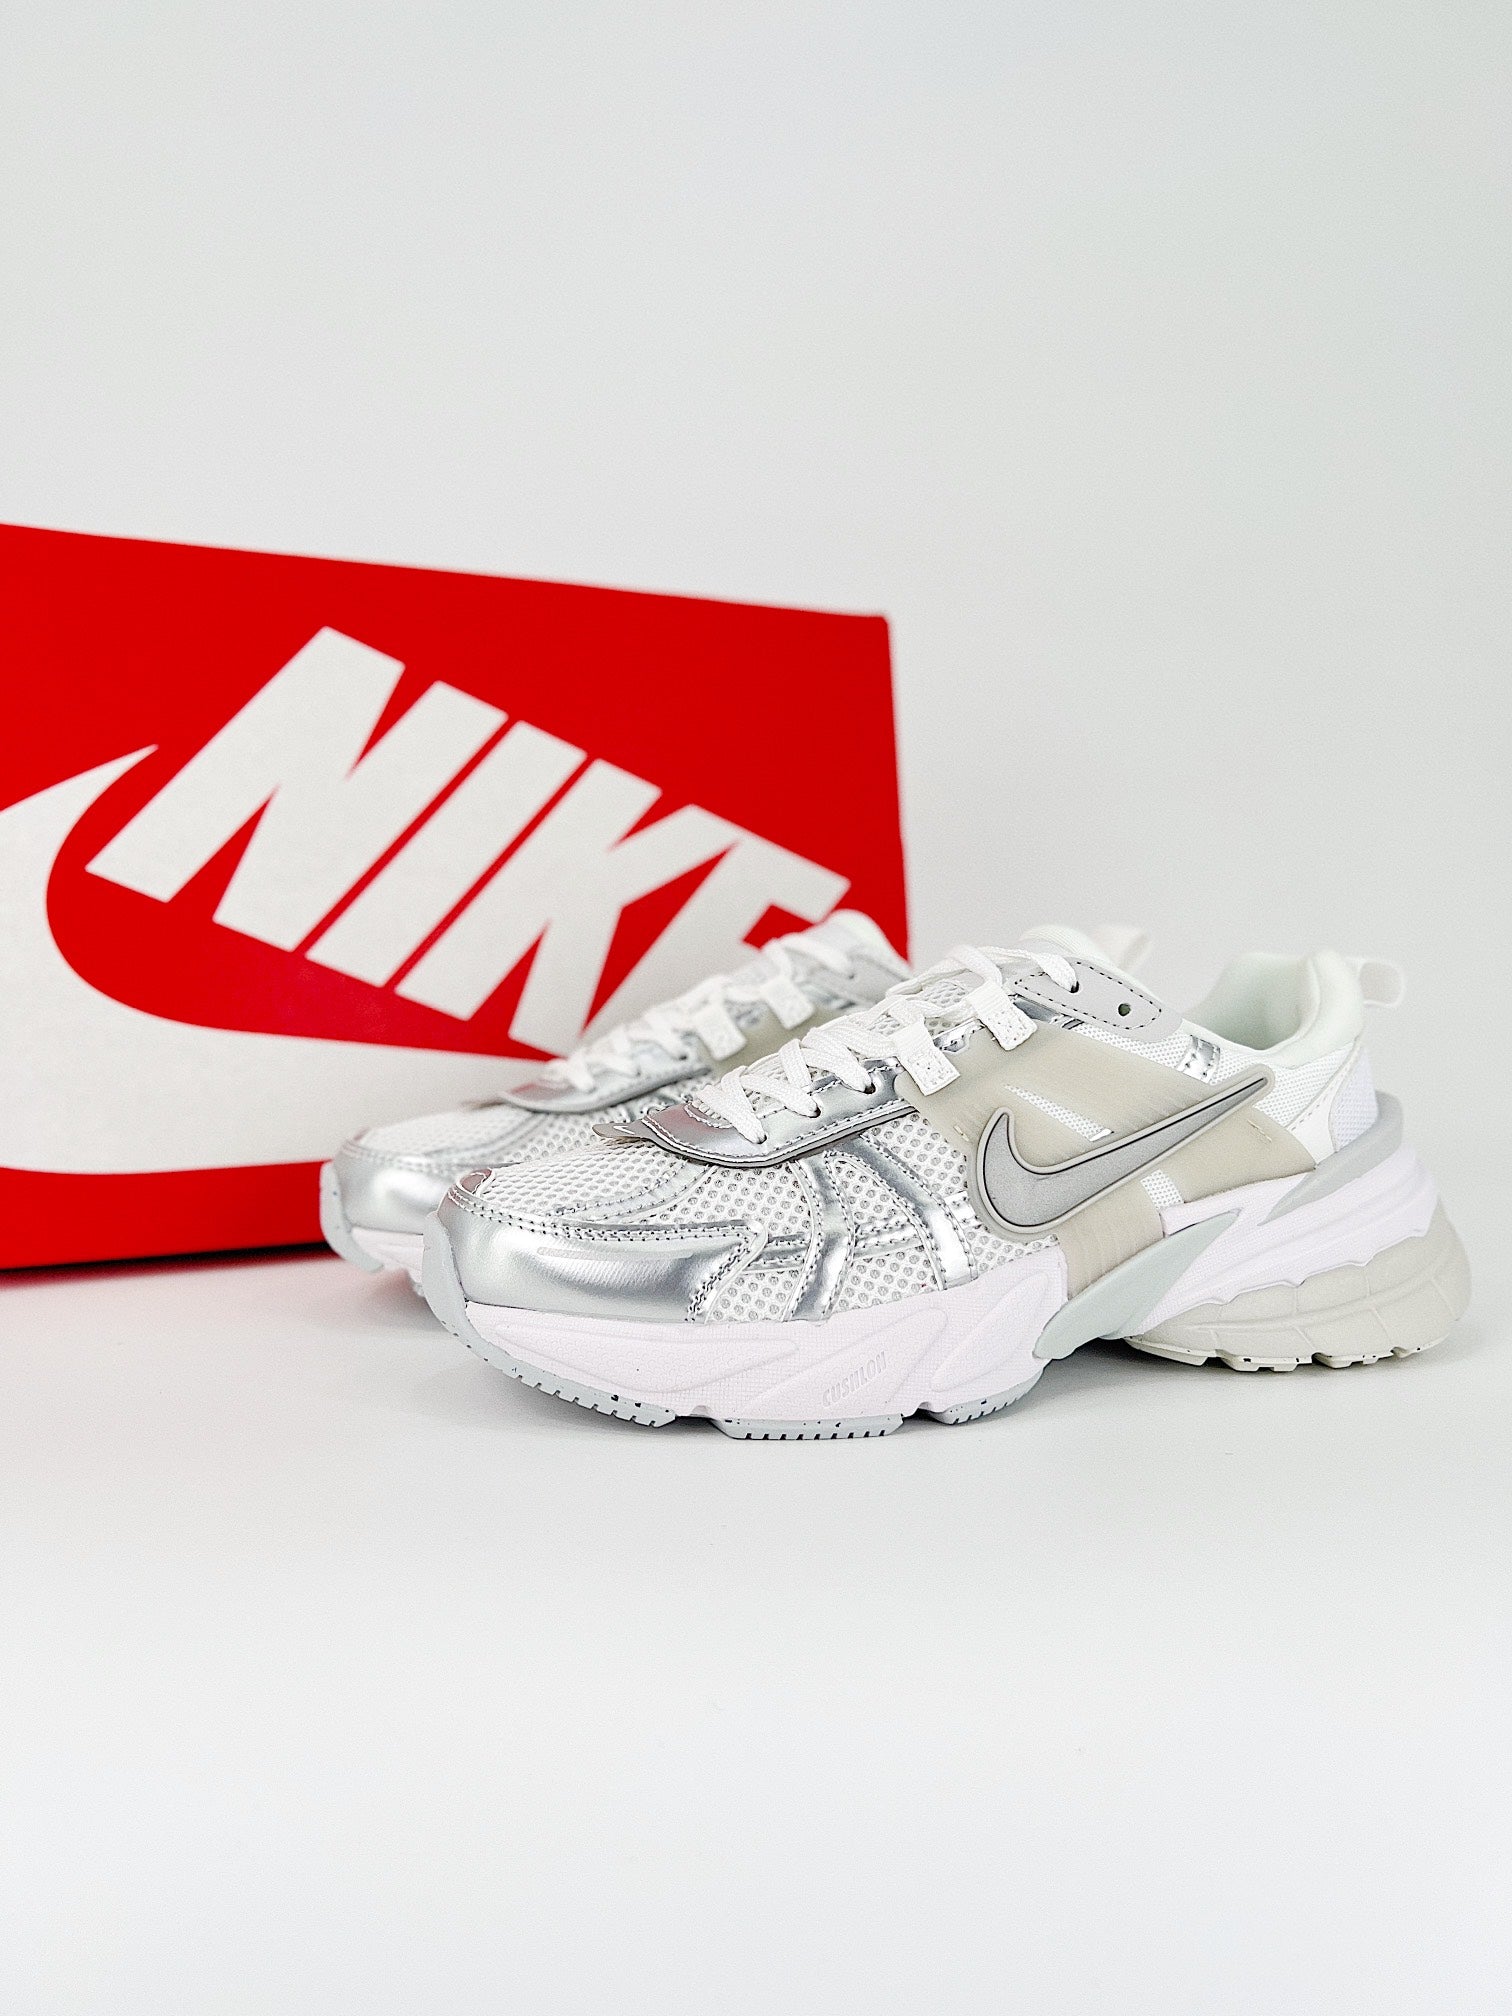 Nike V2k run silver